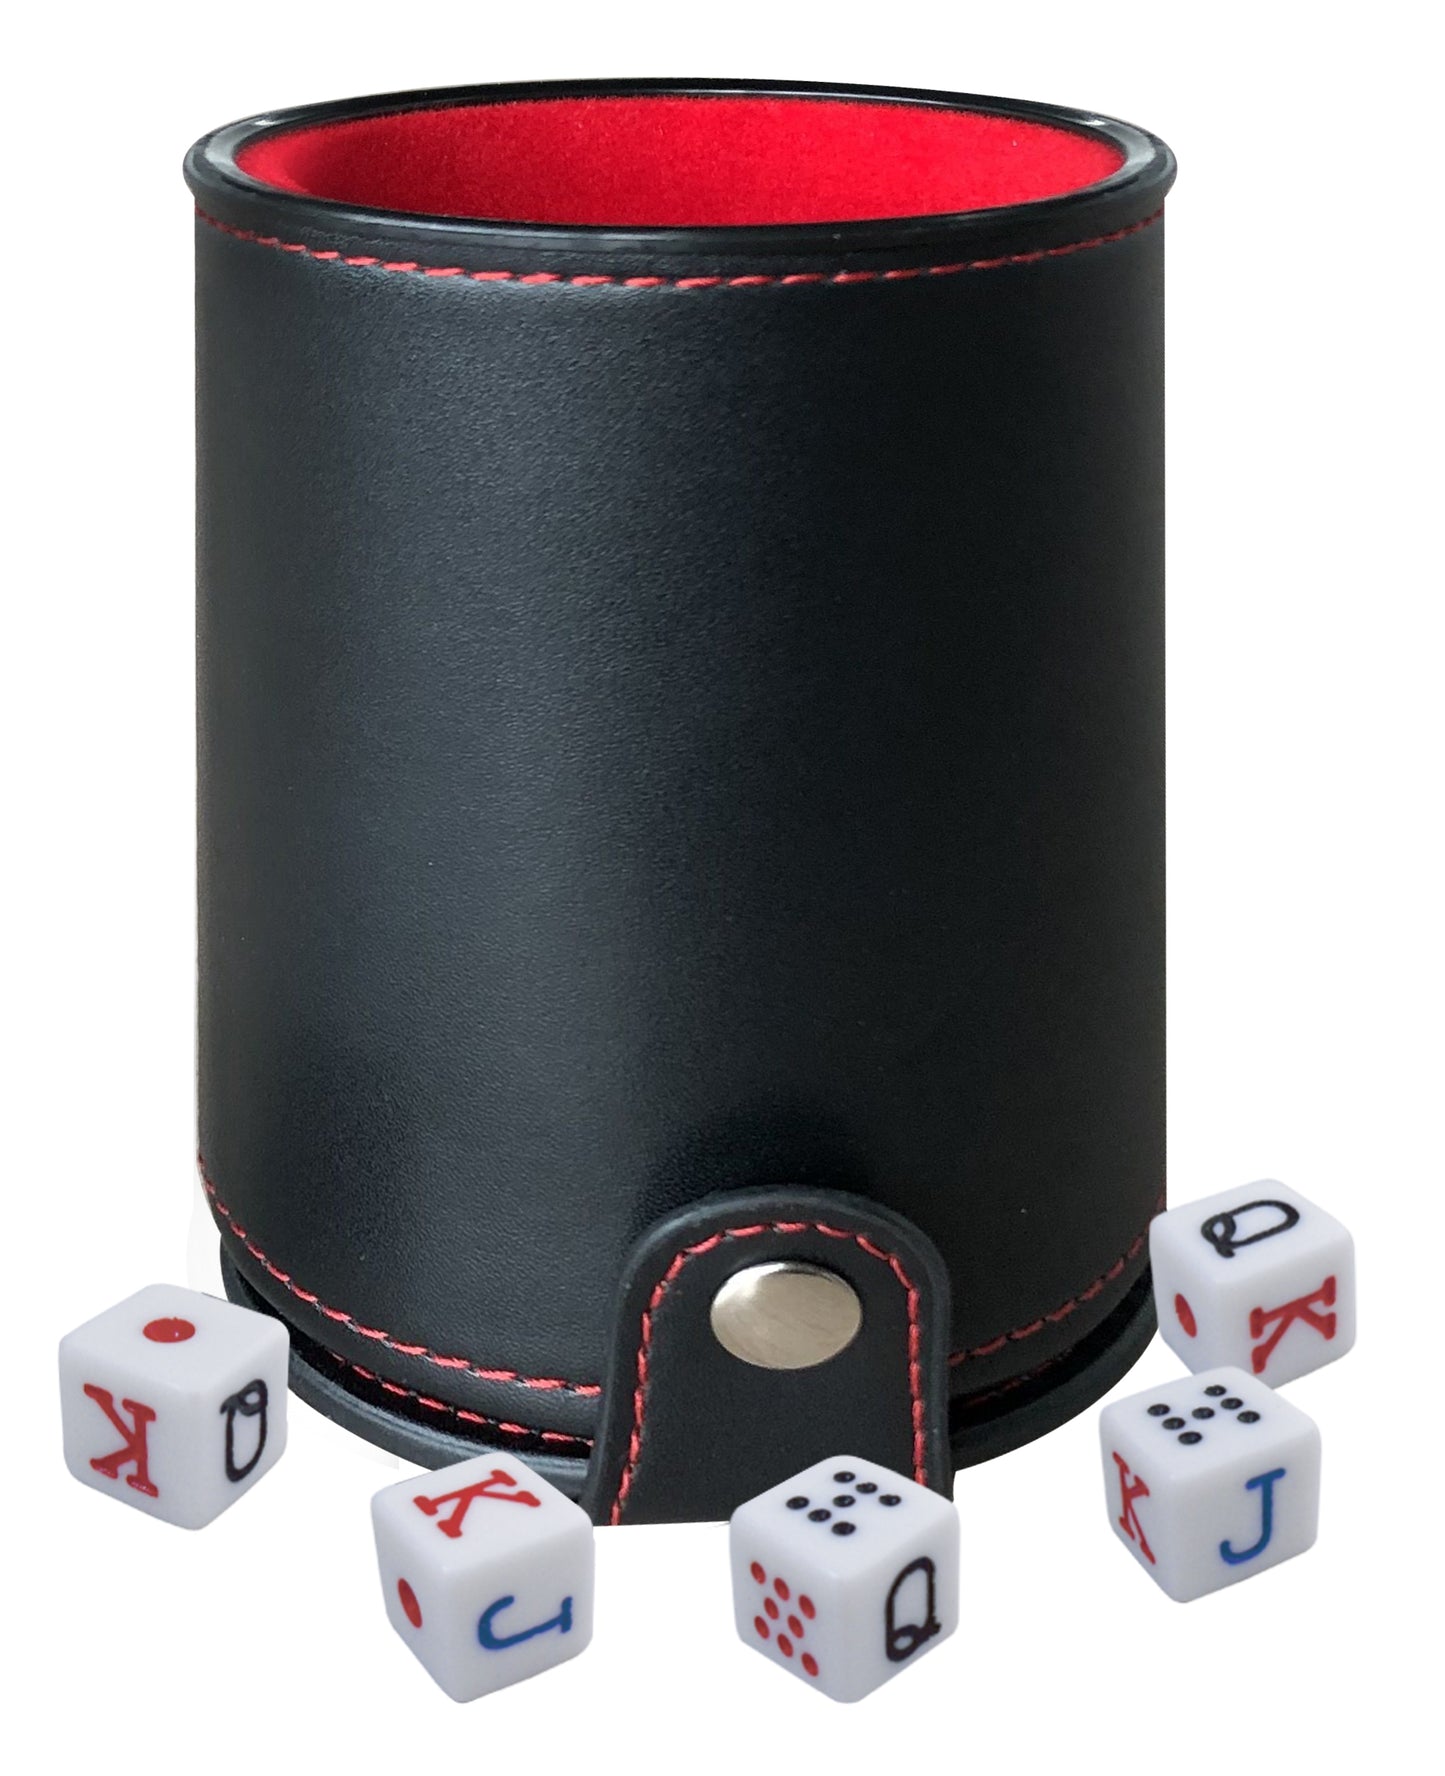 
                  
                    Bene Casa professional dice cup w/ set of 5 poker dice, quality poker dice
                  
                